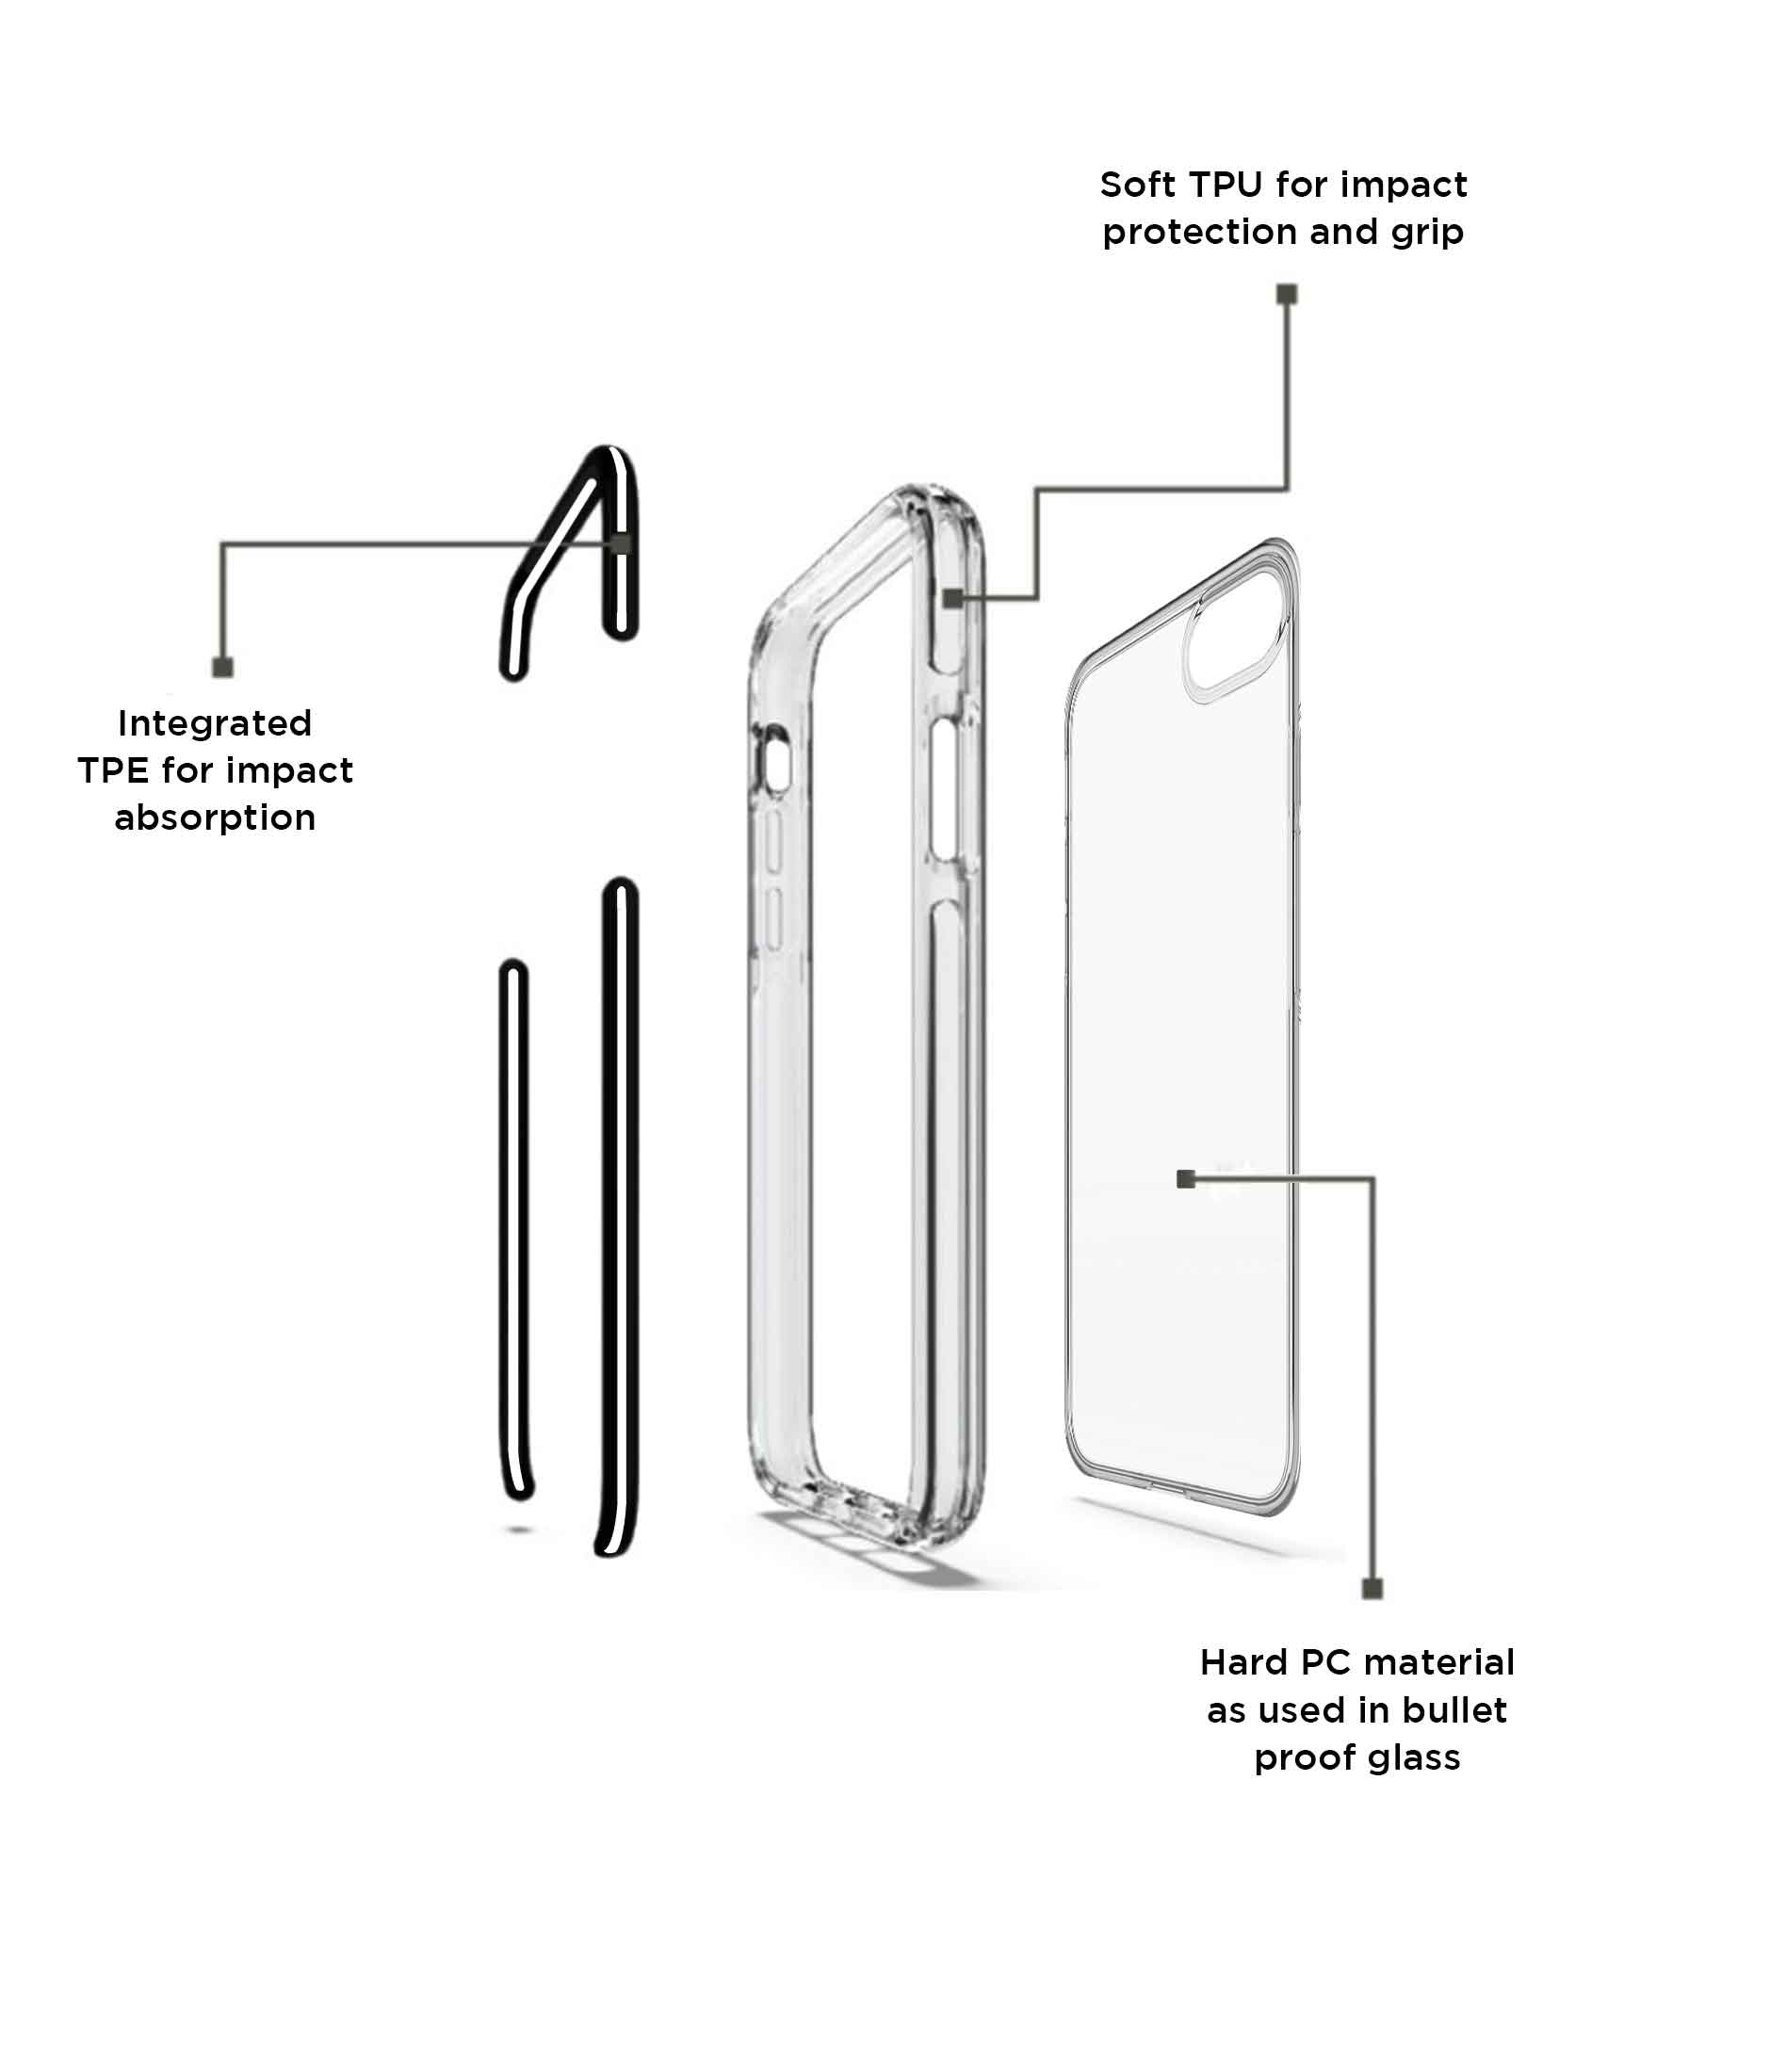 Illuminated Black Widow - Extreme Phone Case for iPhone 8